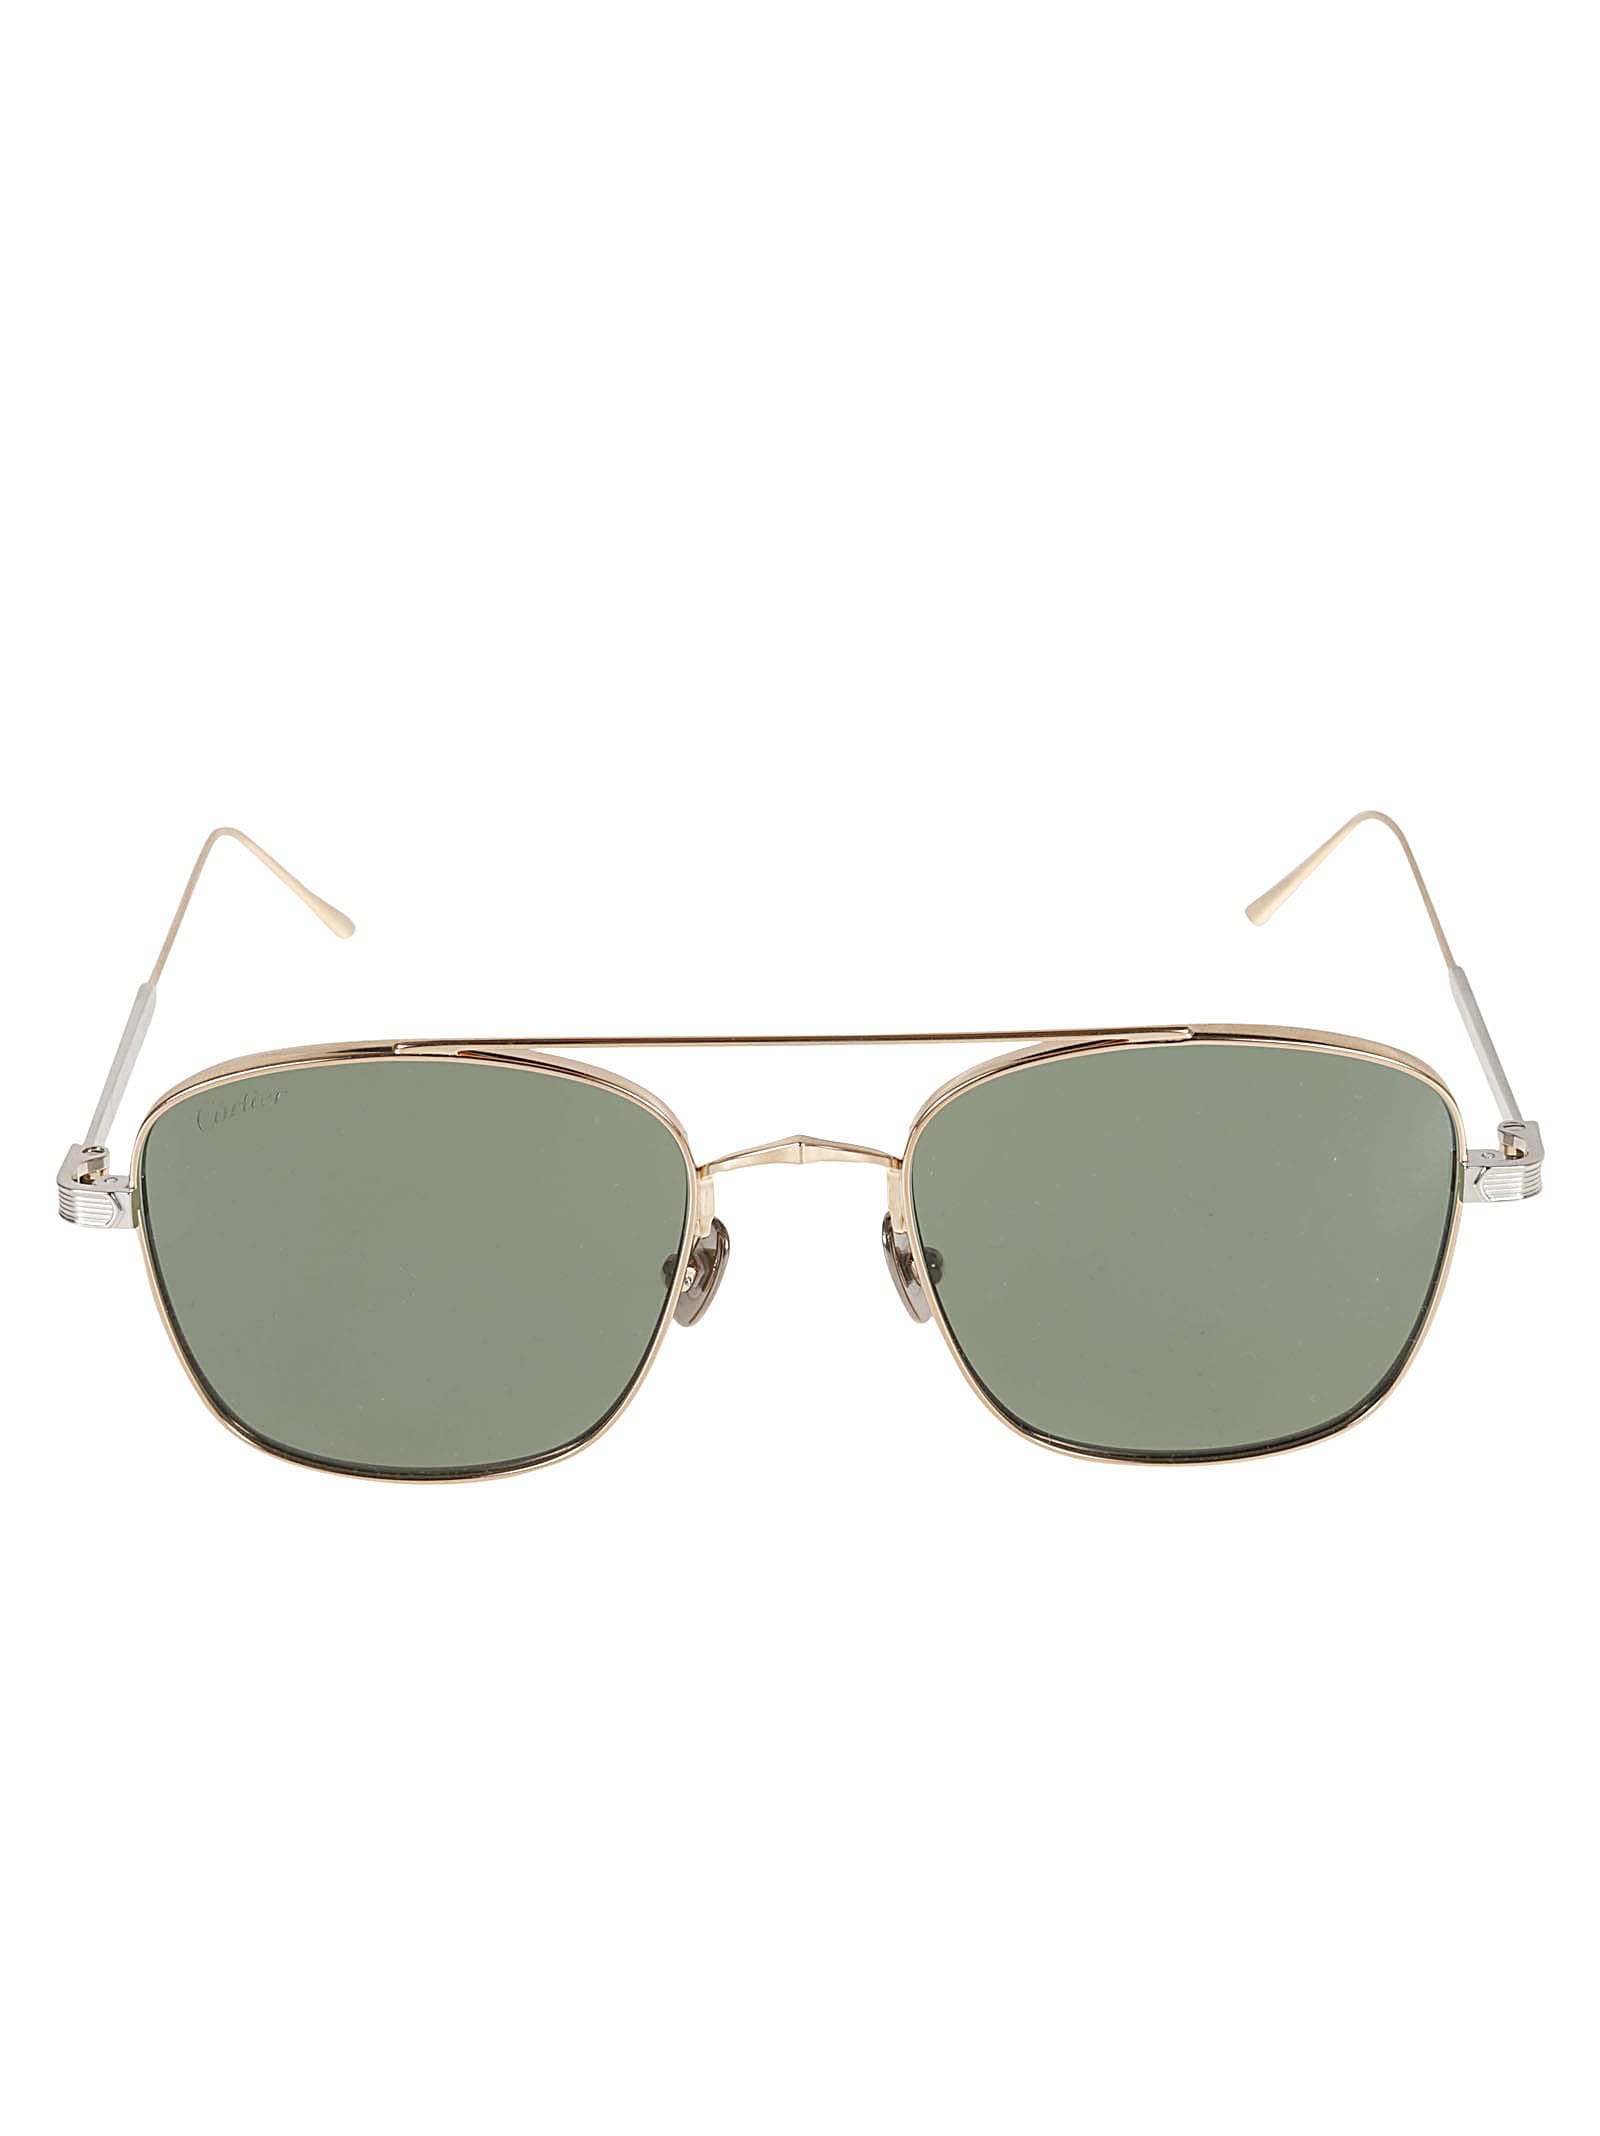 Cartier Eyewear Aviator Square Sunglasses